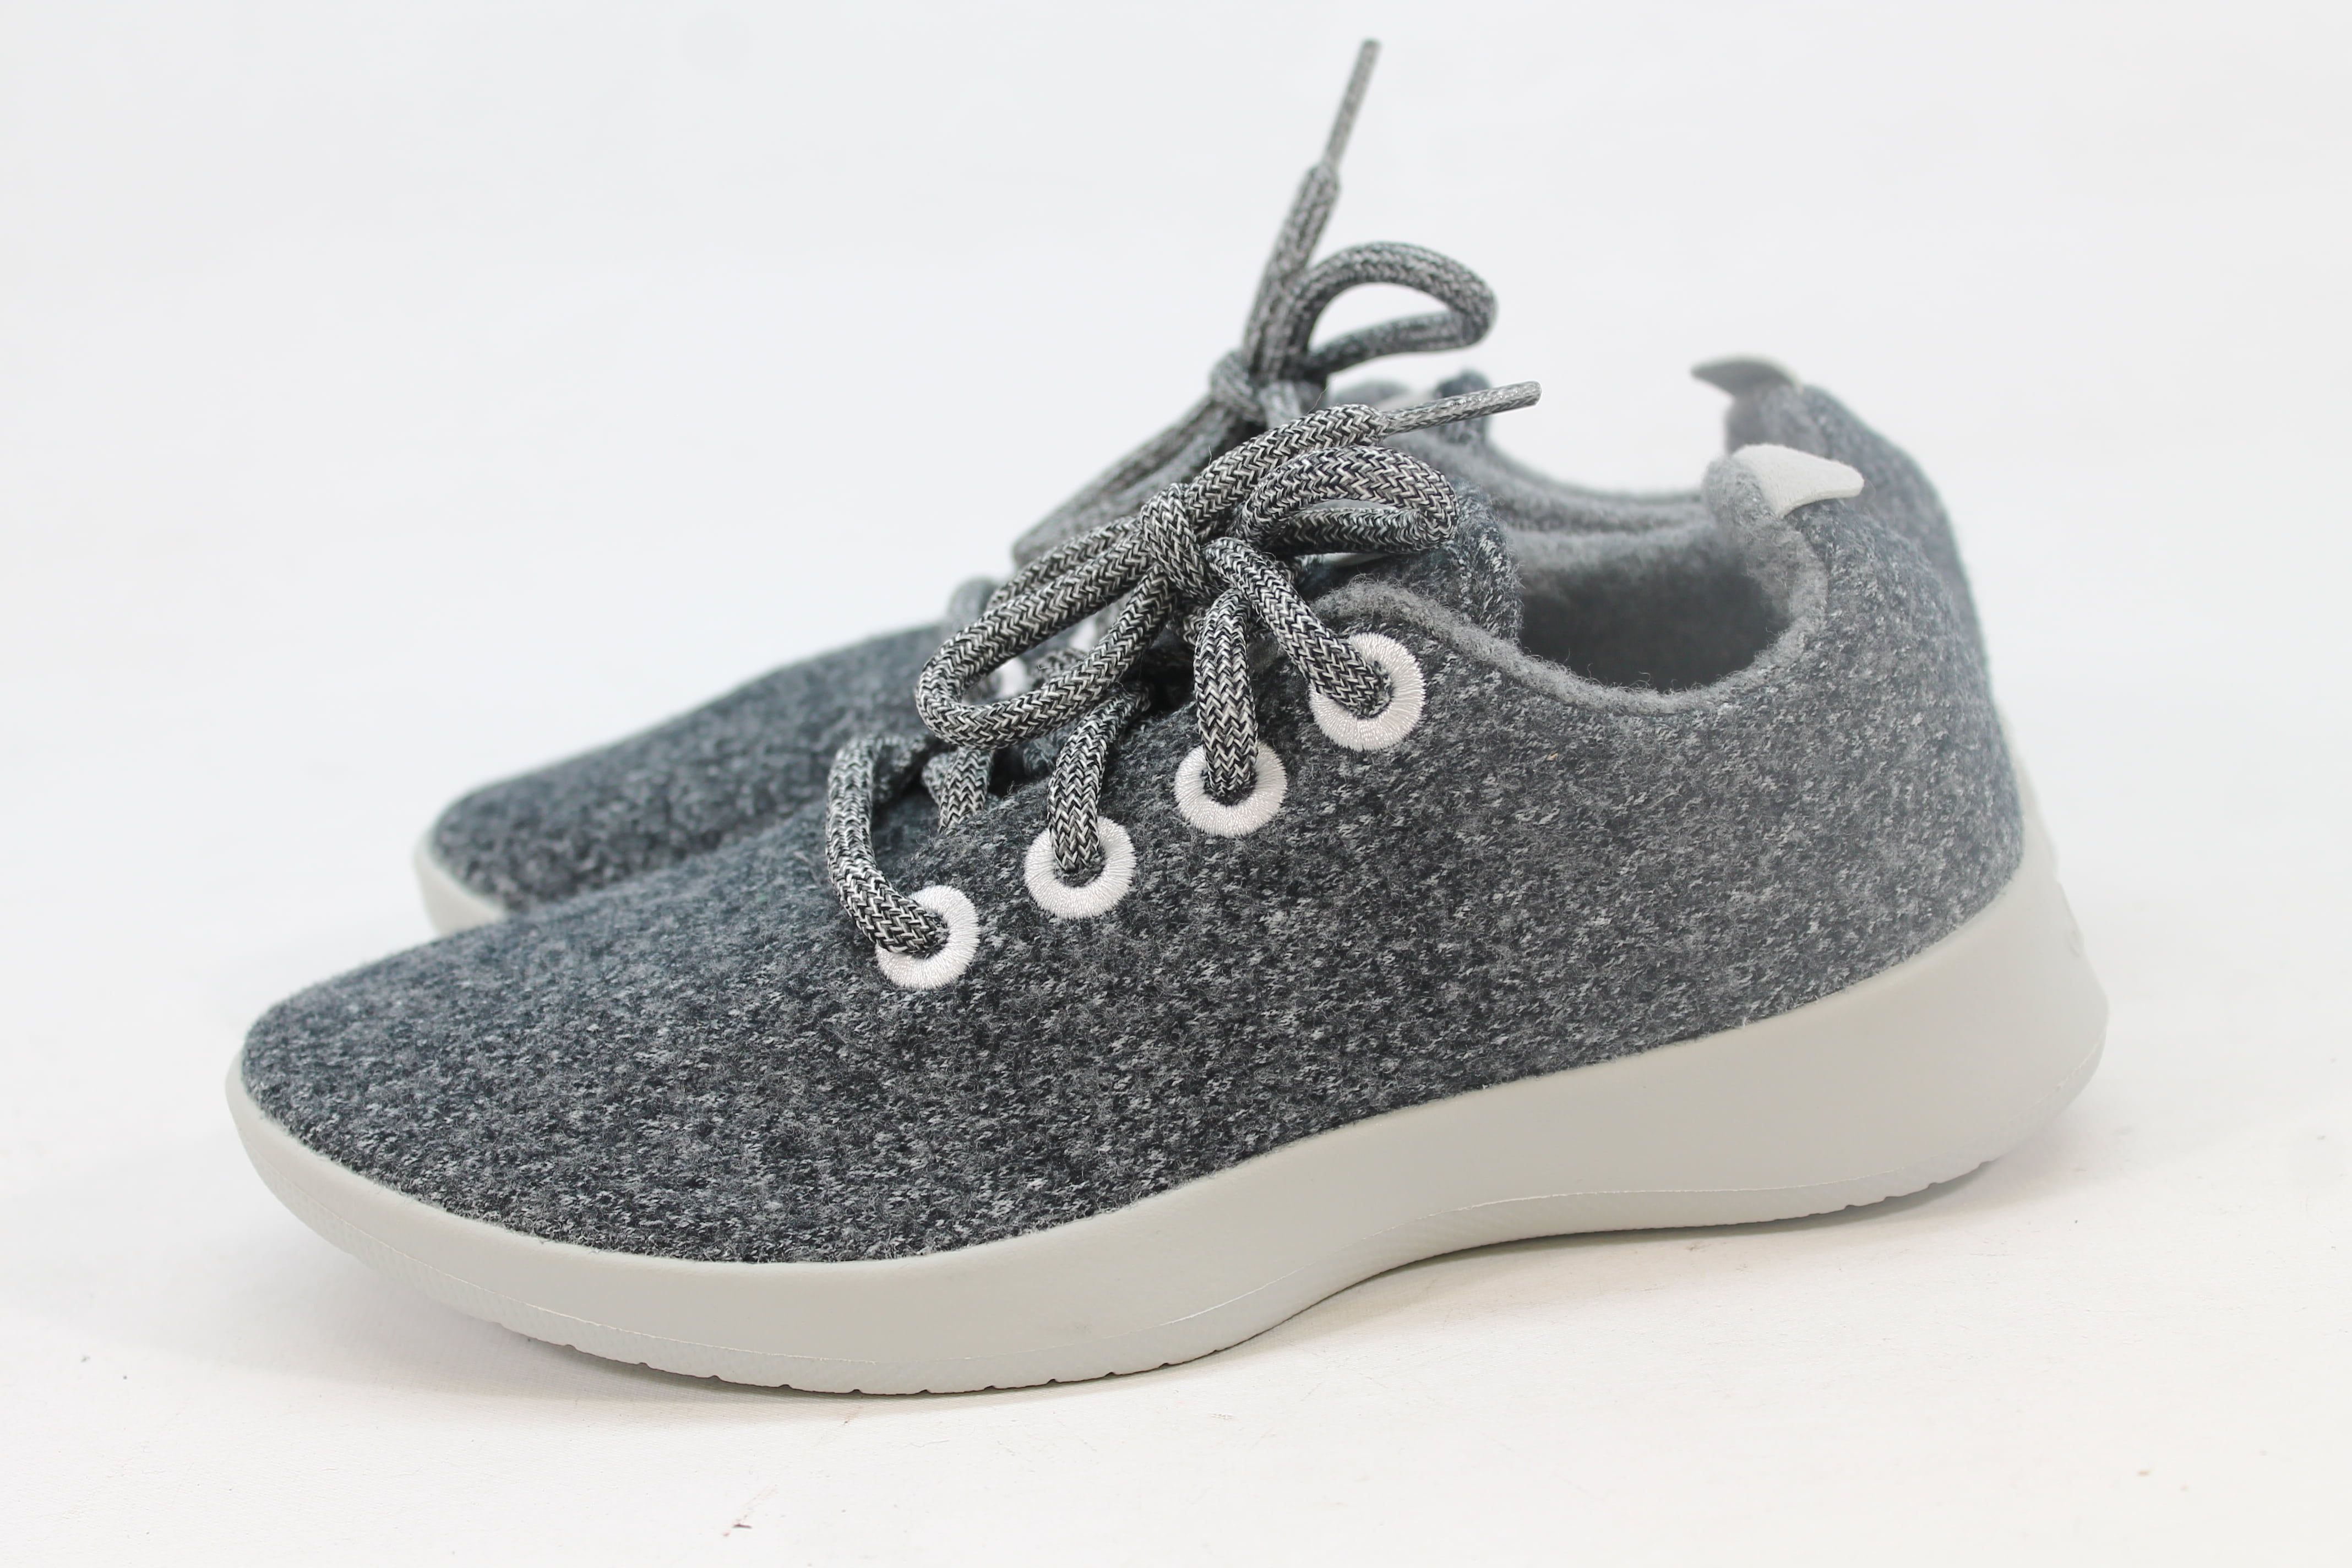 Allbirds Women's Wool Runners Natural Grey/Grey Sole Comfort Shoes ...